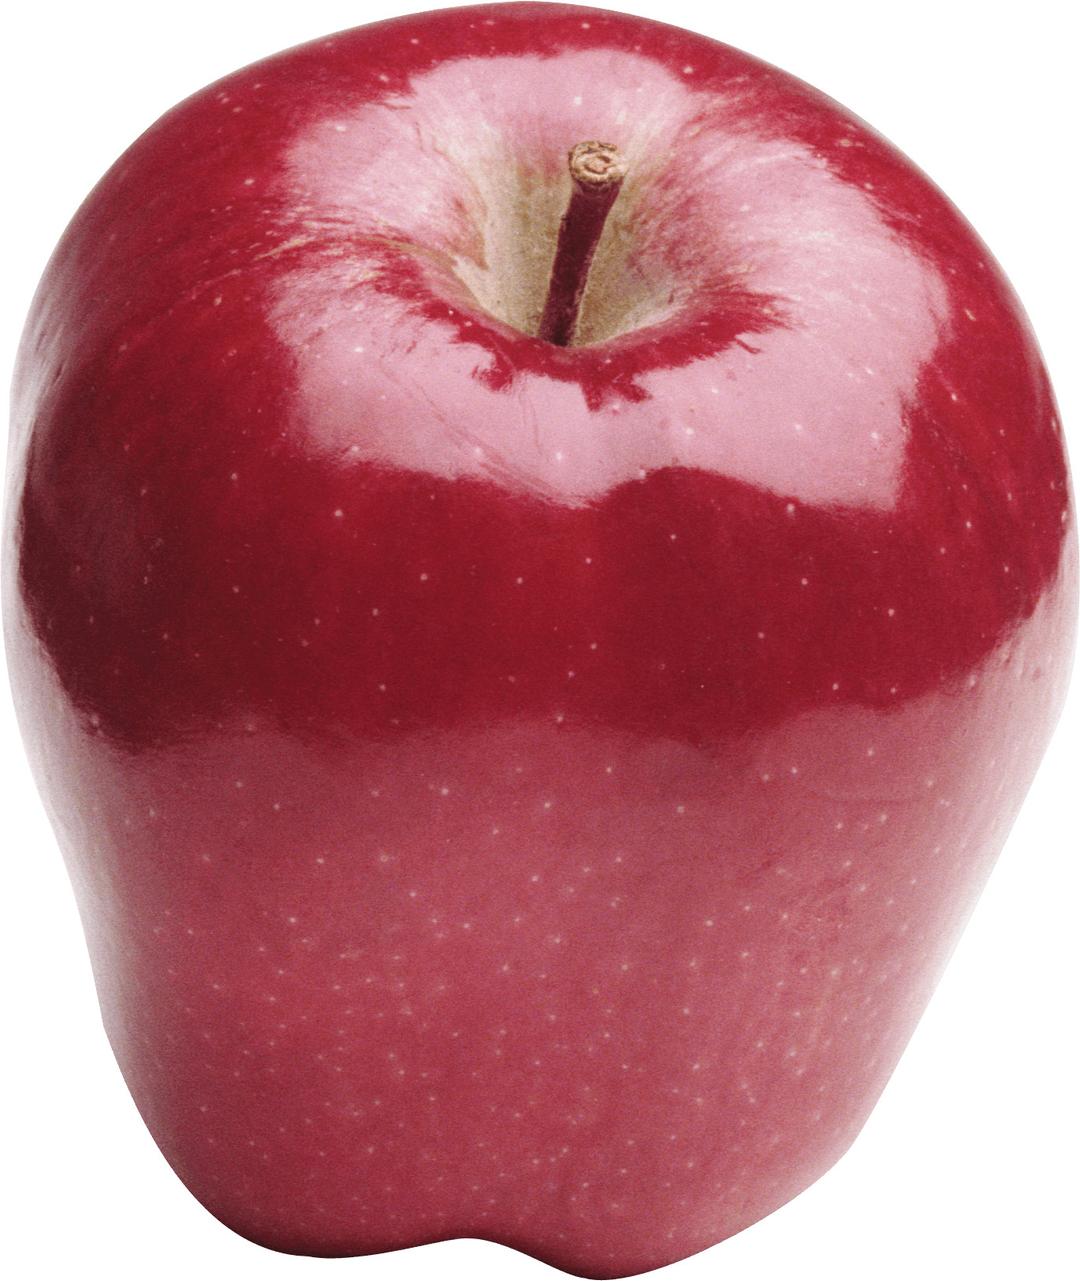 Large Red Apple png transparent